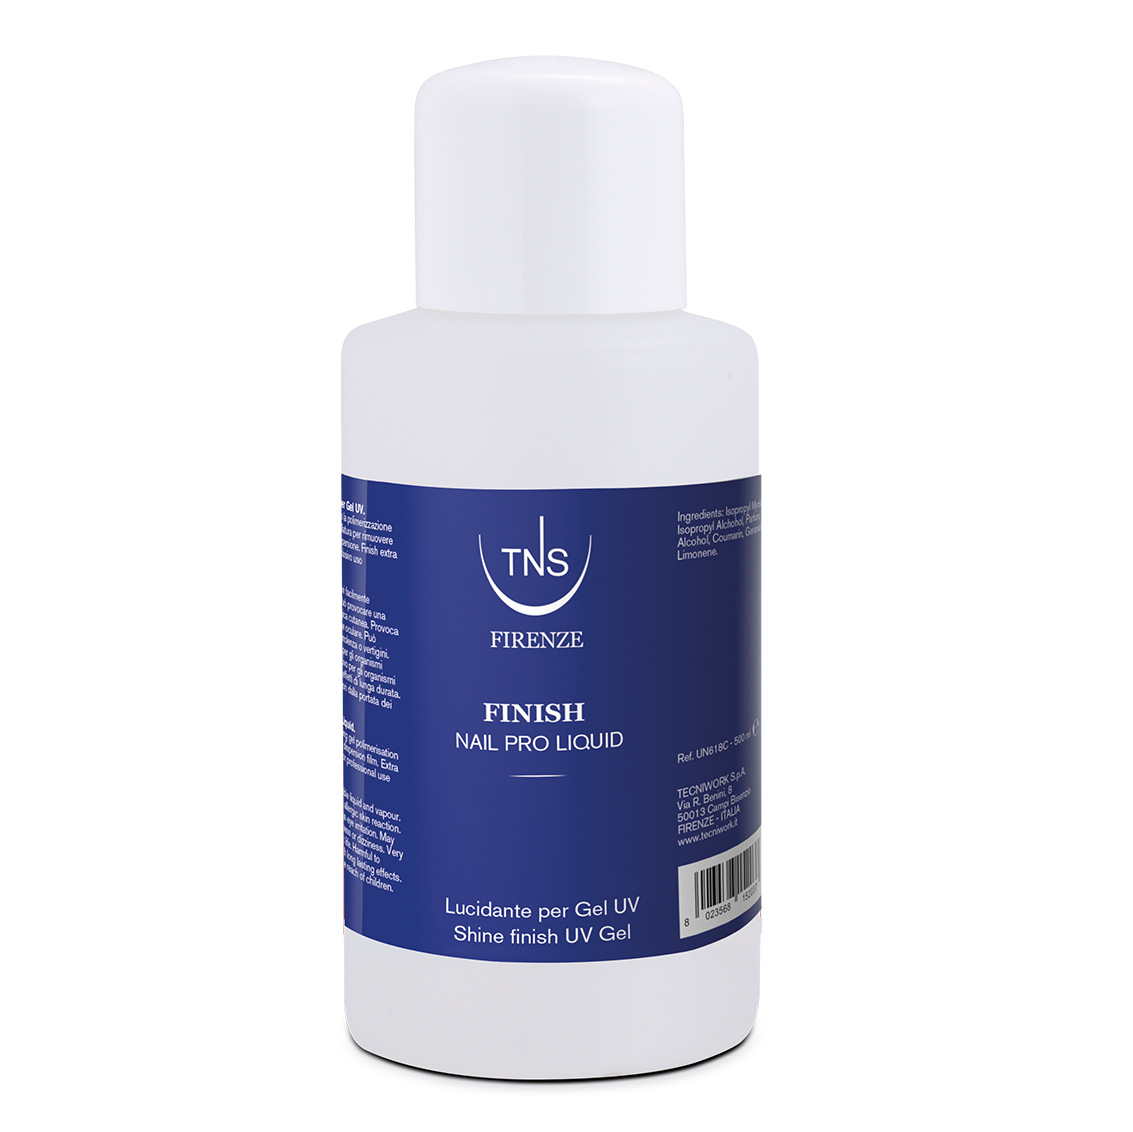 Finish 500 ml - Oil-based polishing solution to remove UV gel dispersion